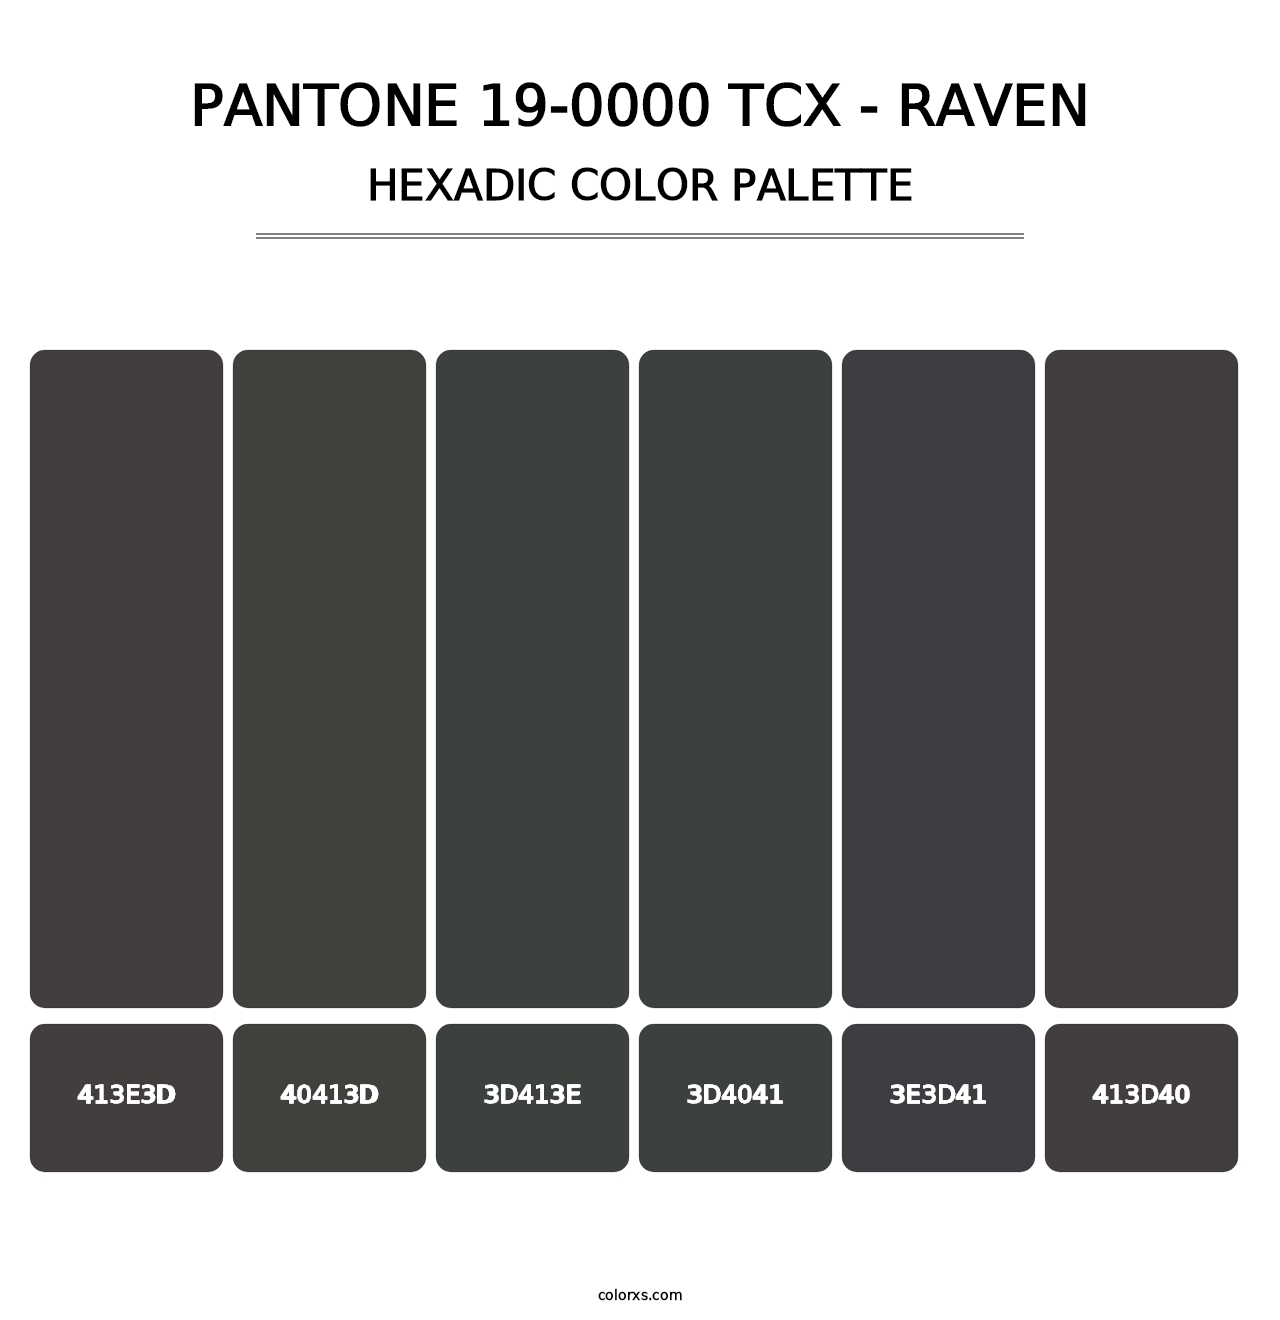 PANTONE 19-0000 TCX - Raven - Hexadic Color Palette